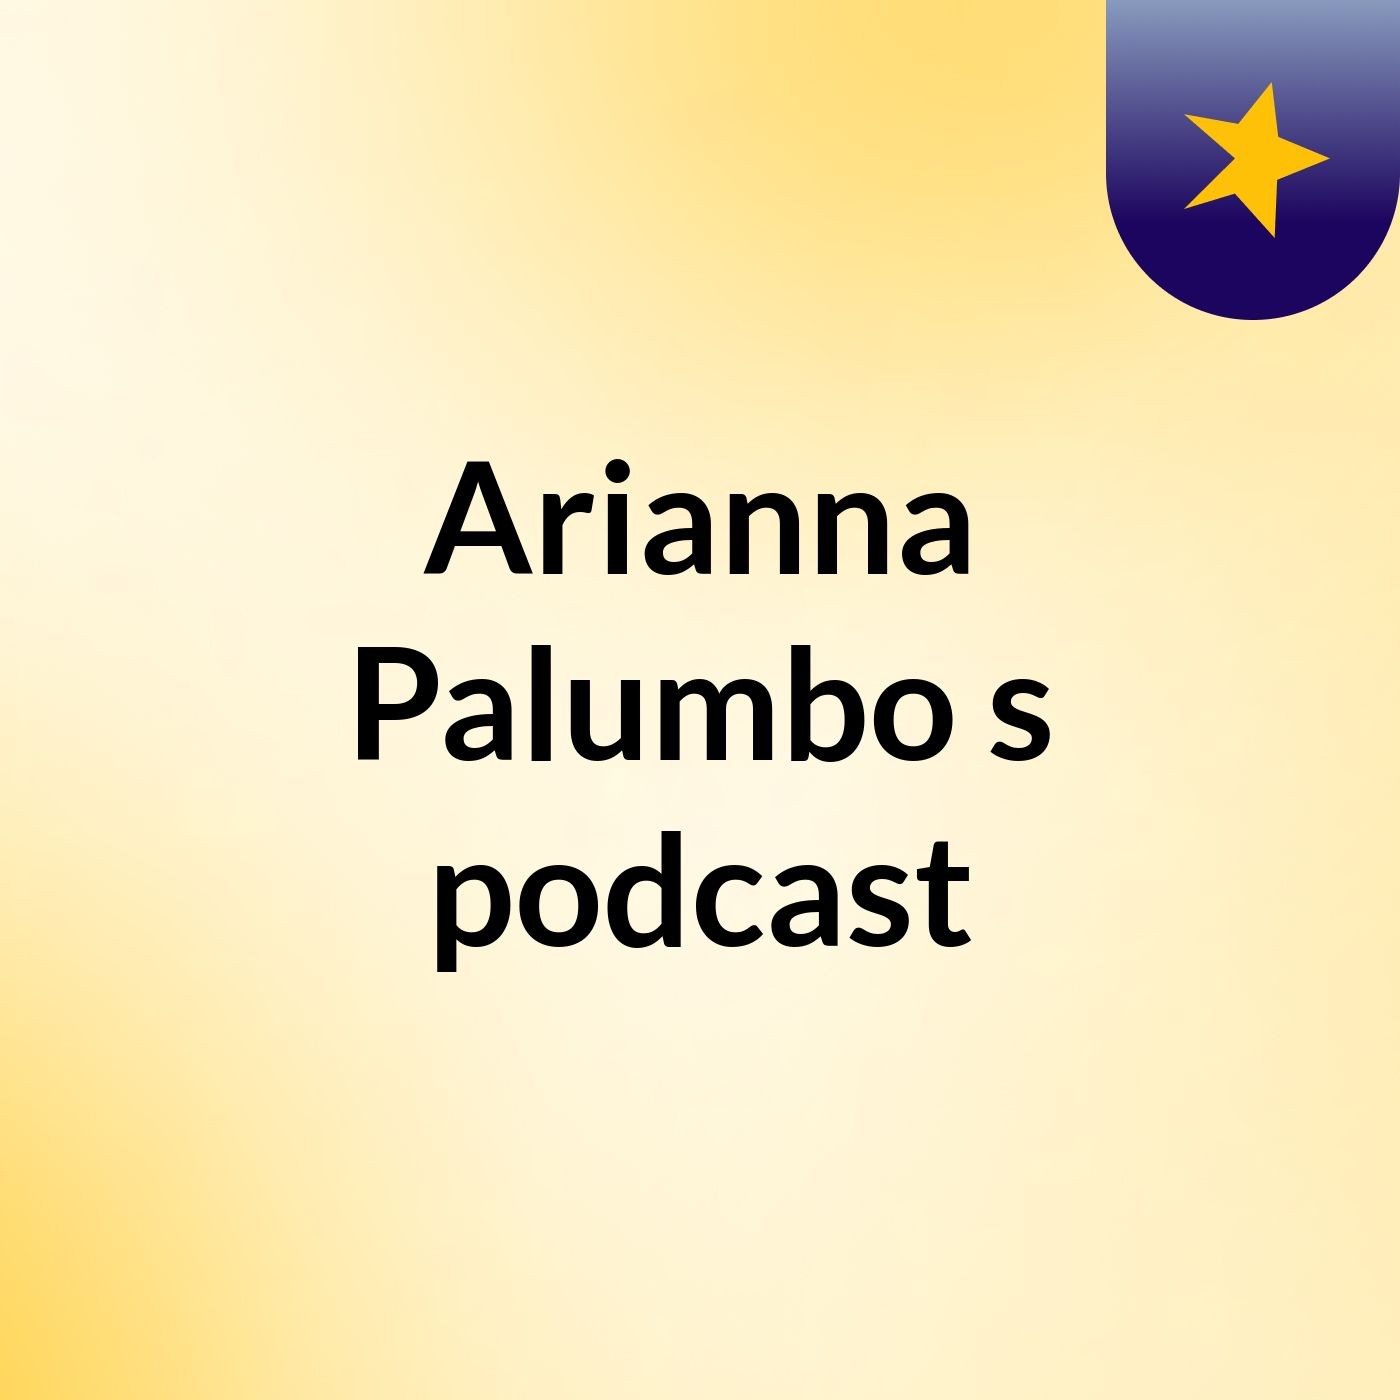 Arianna Palumbo's podcast